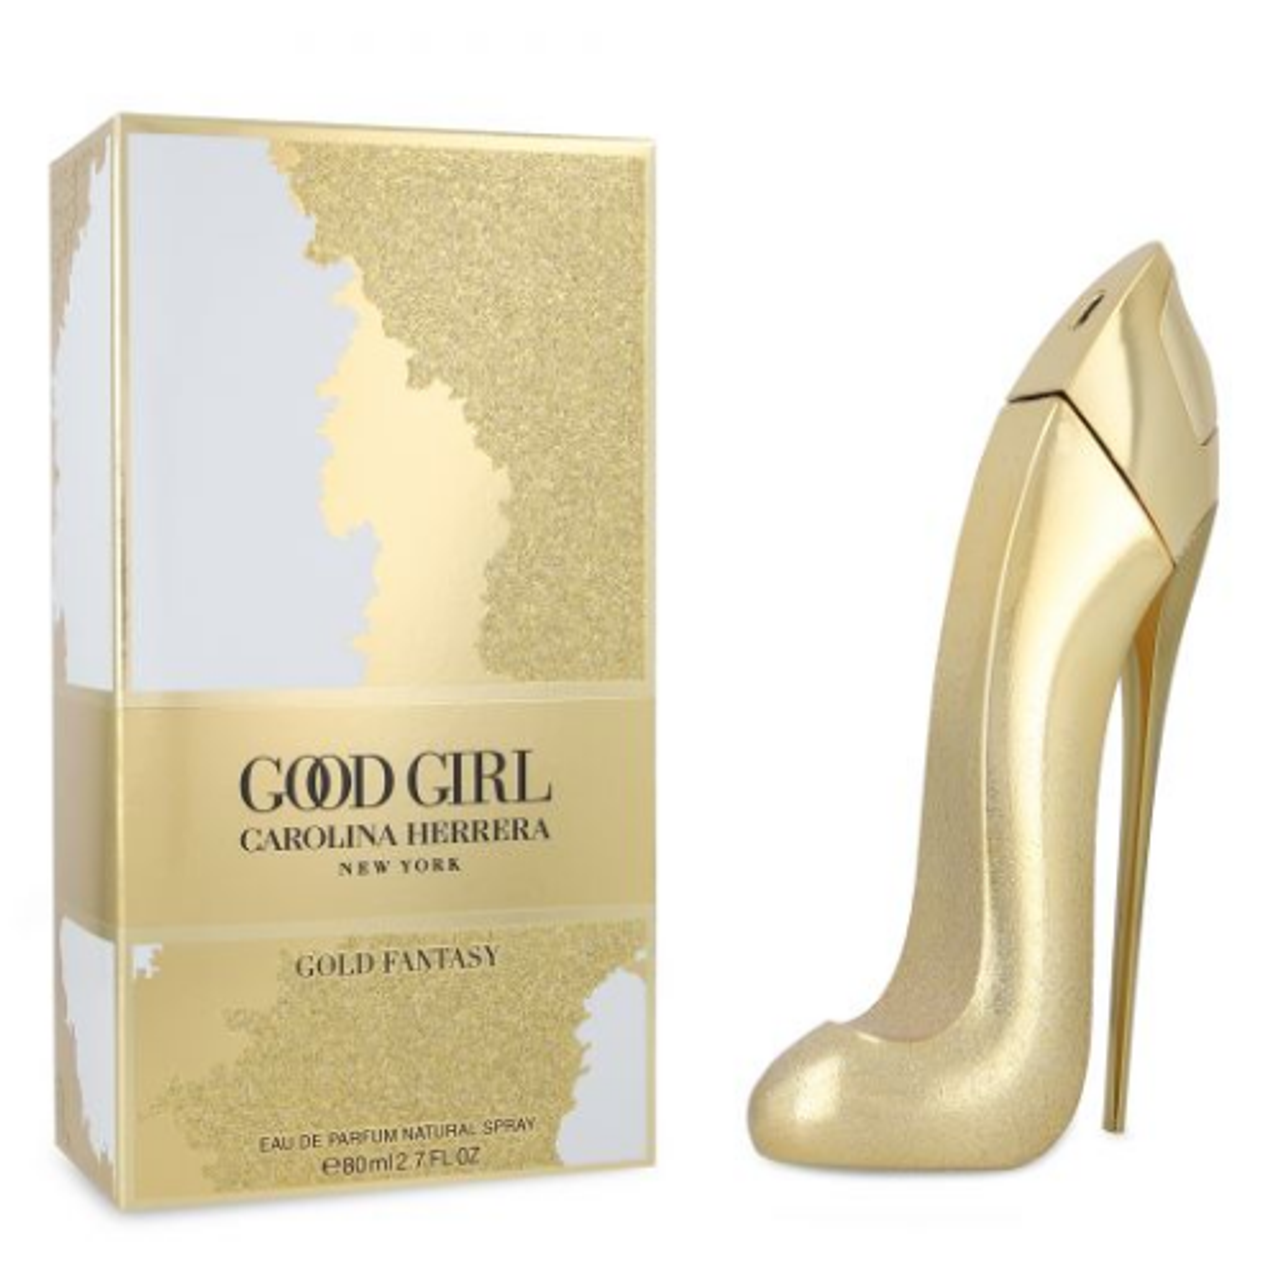 Carolina Herrera Ladies Good Girl Gold Fantasy EDP Spray 2.7 oz Fragrances  8411061028919 - Fragrances & Beauty, Good Girl Gold Fantasy - Jomashop